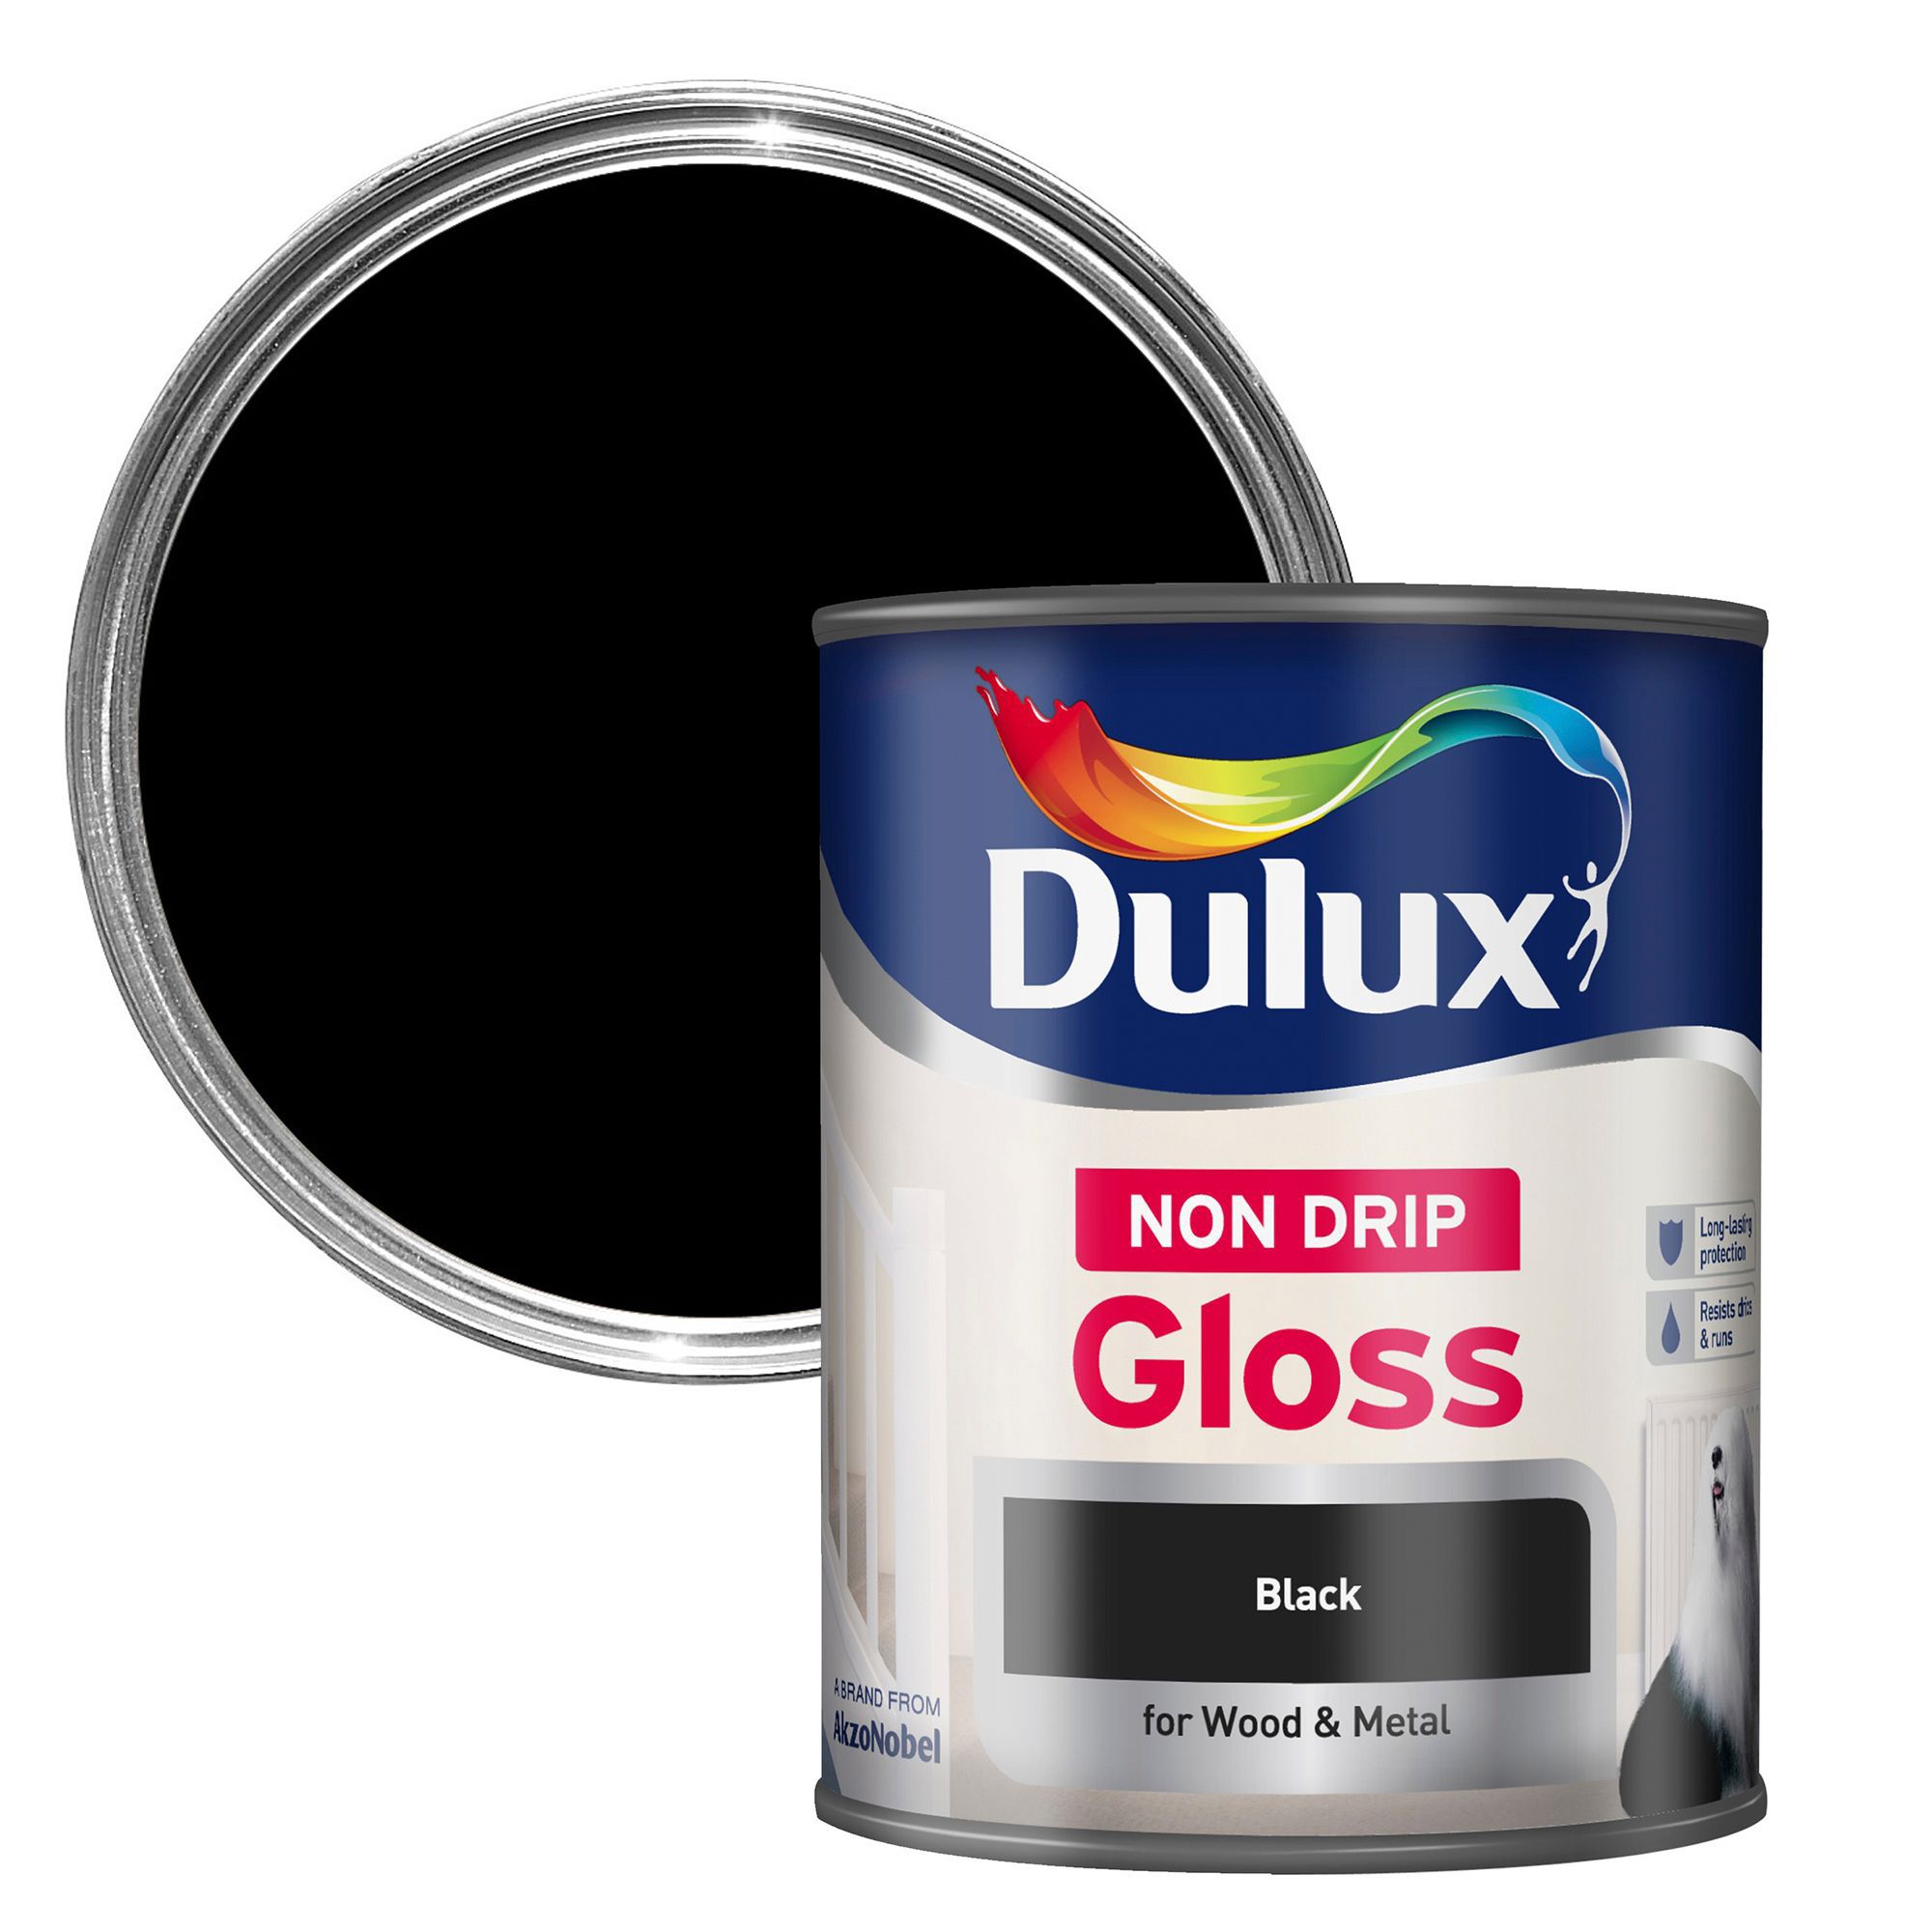 Dulux Black Paint | My XXX Hot Girl